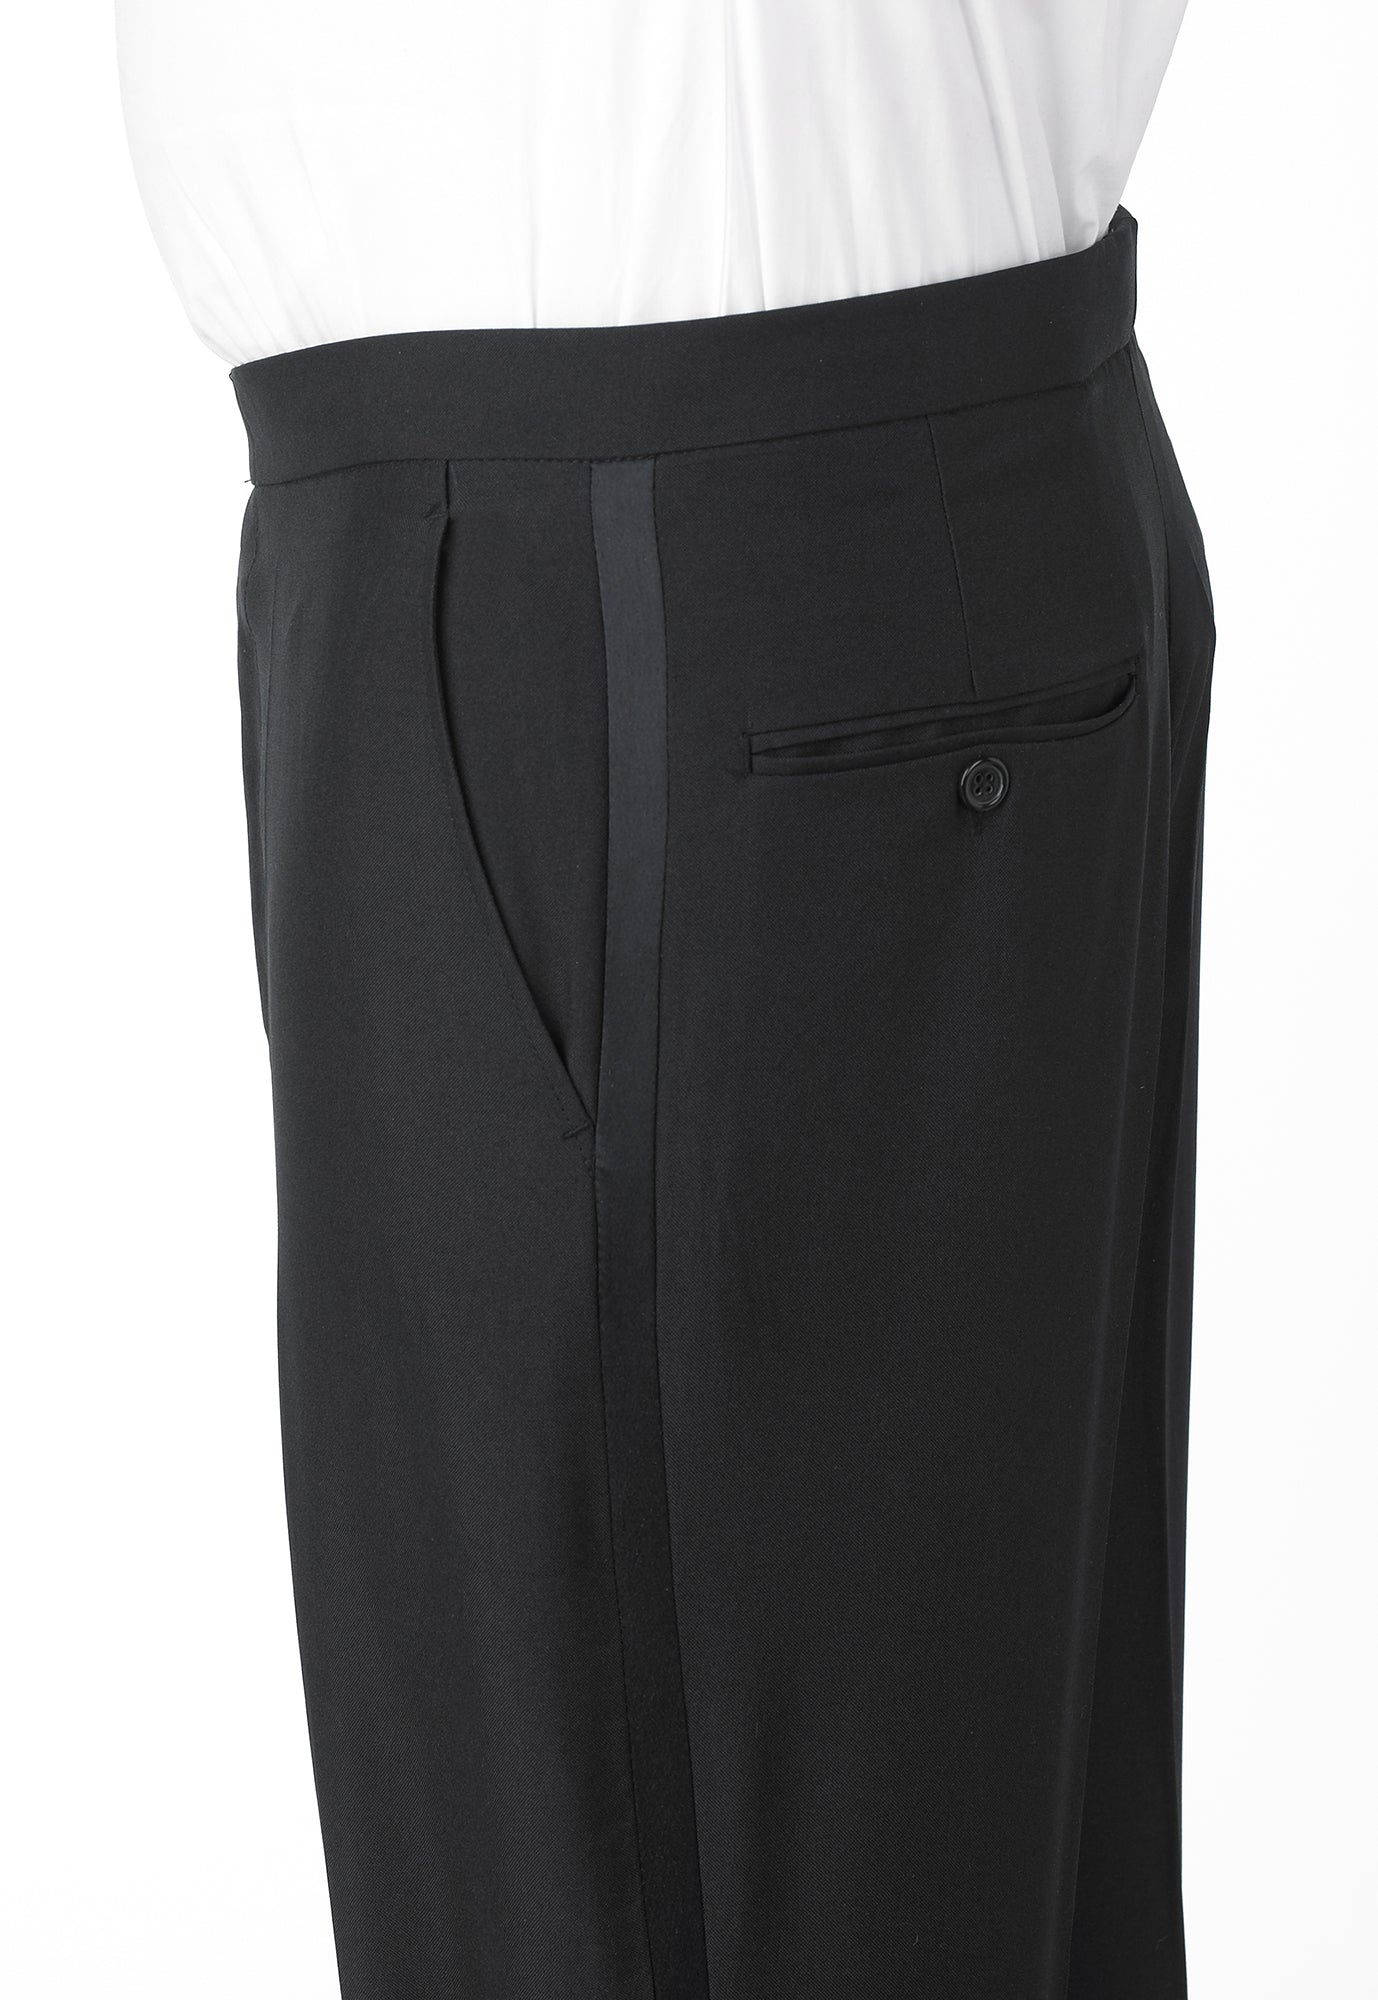 Men's Black, Flat Front, Tuxedo Pants with Satin Stripe - 99tux